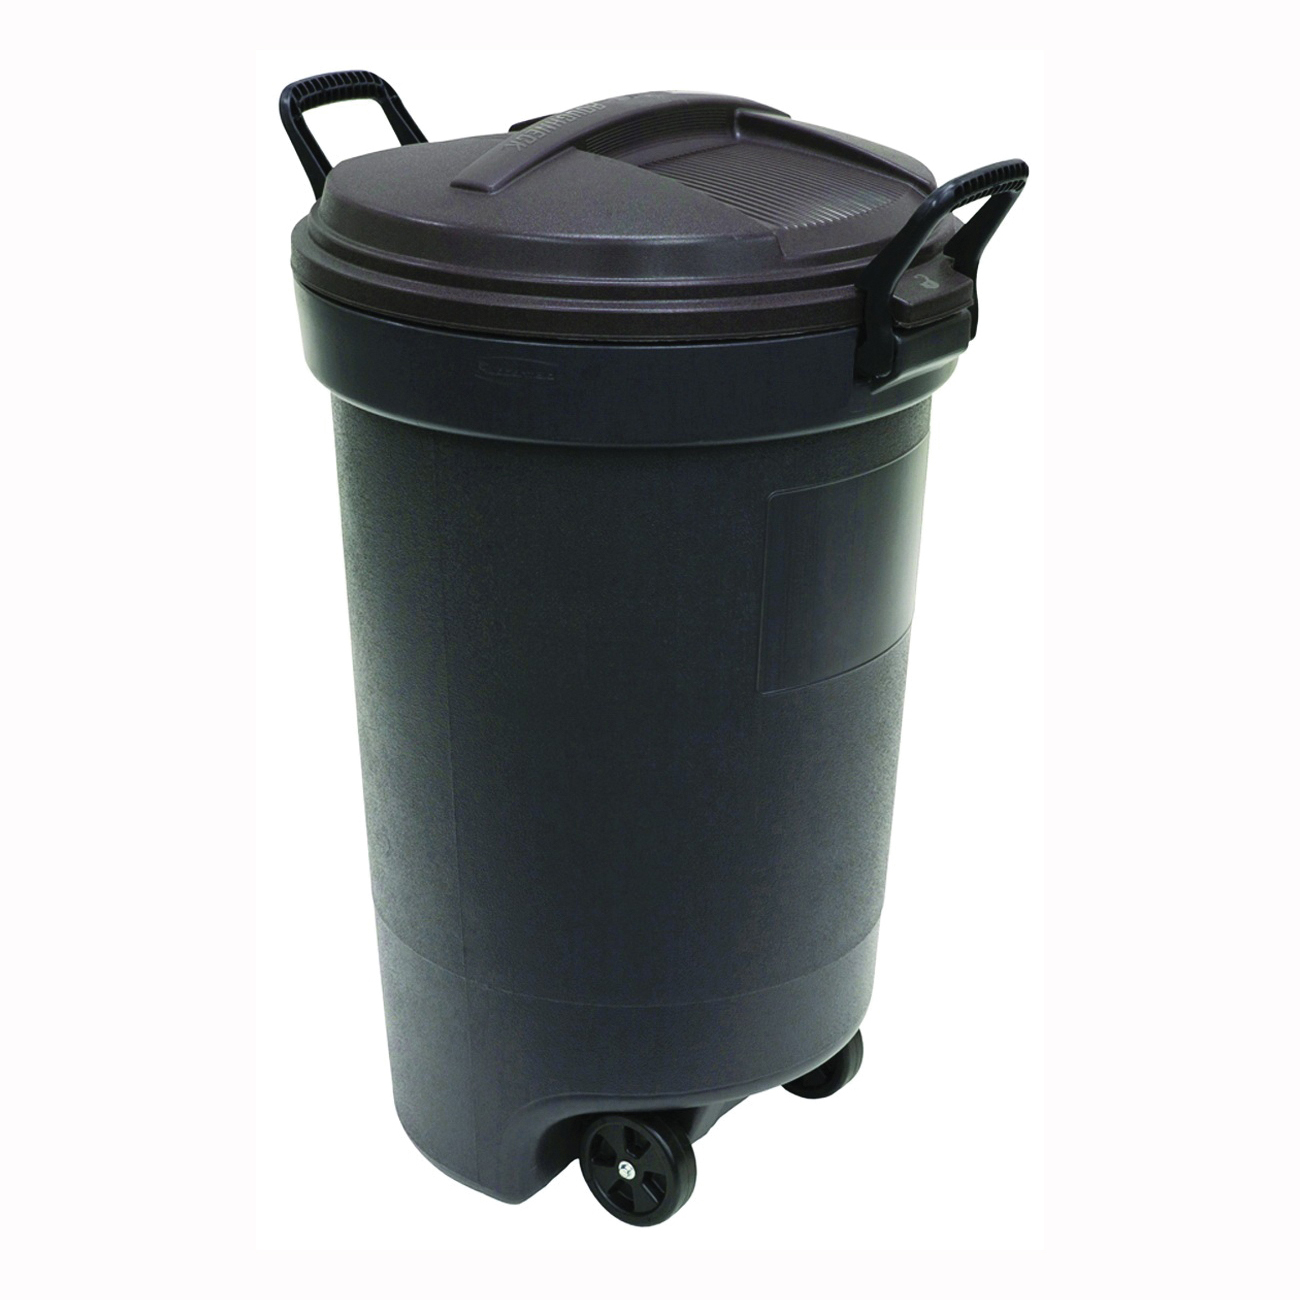 RM133902 Trash Can, 32 gal Capacity, Plastic, Kona, Snap-Fit Lid Closure